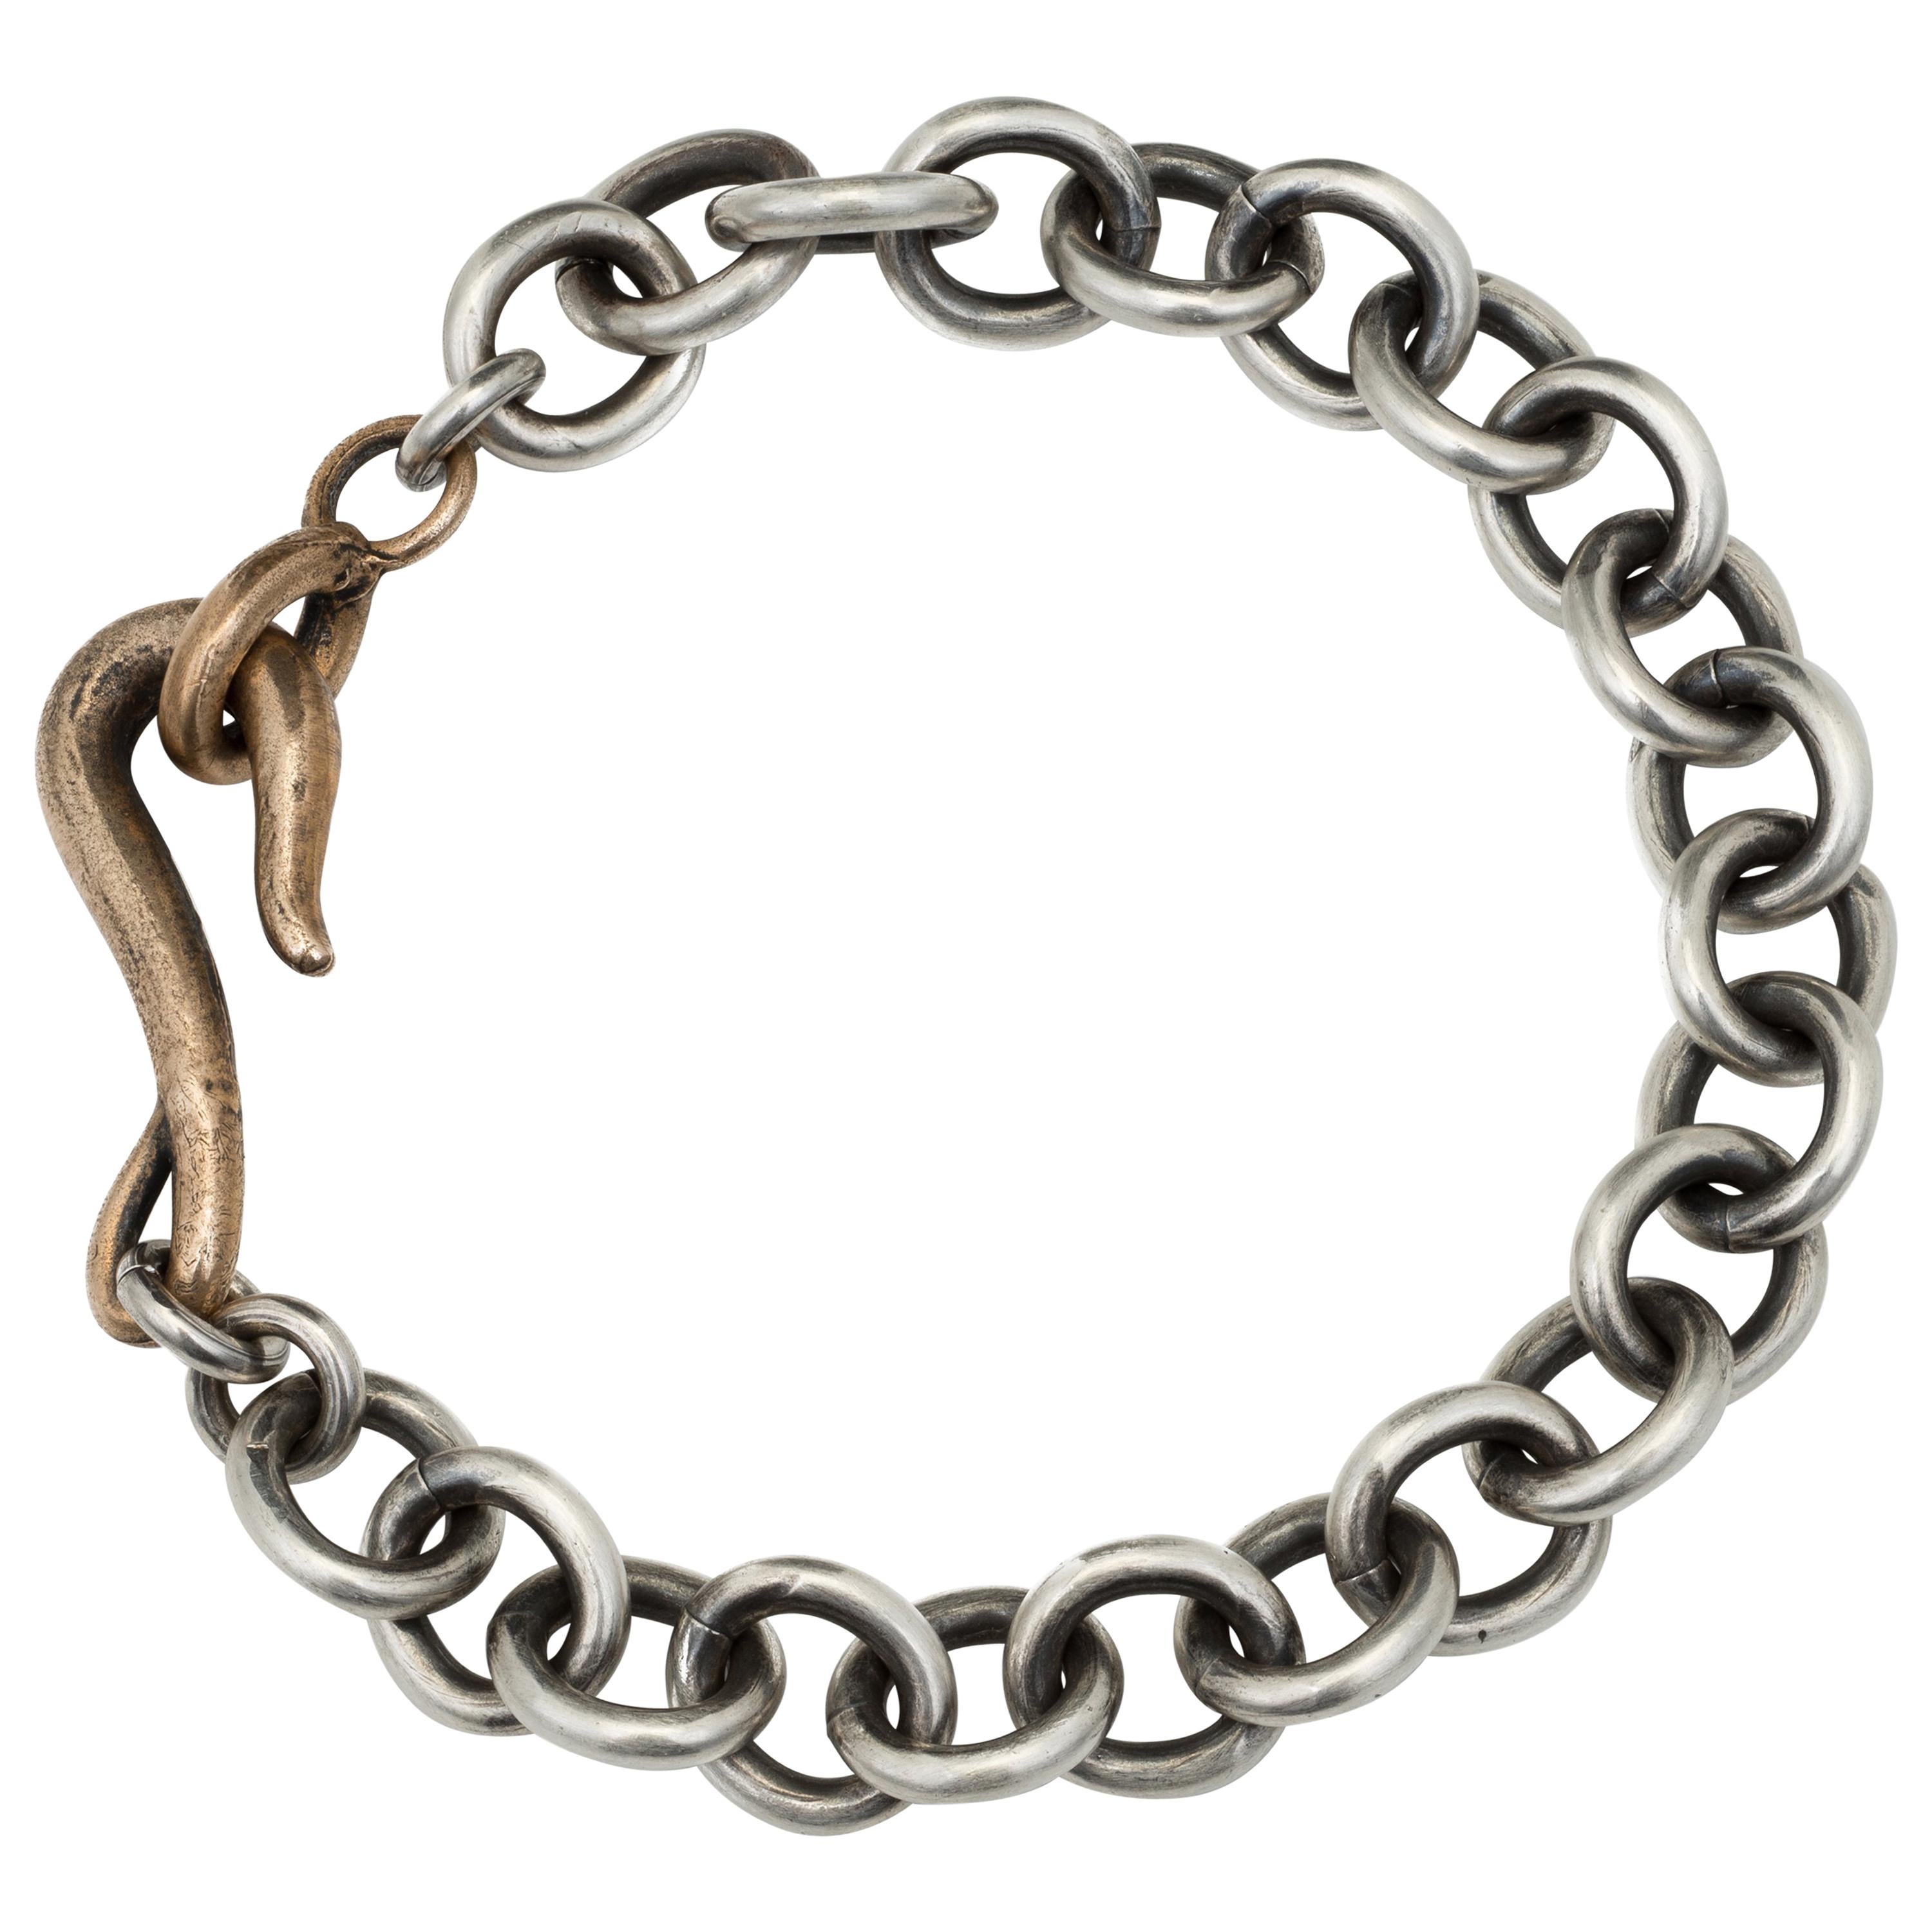 Heavy Silver Chain Bracelet - 4 For Sale on 1stDibs